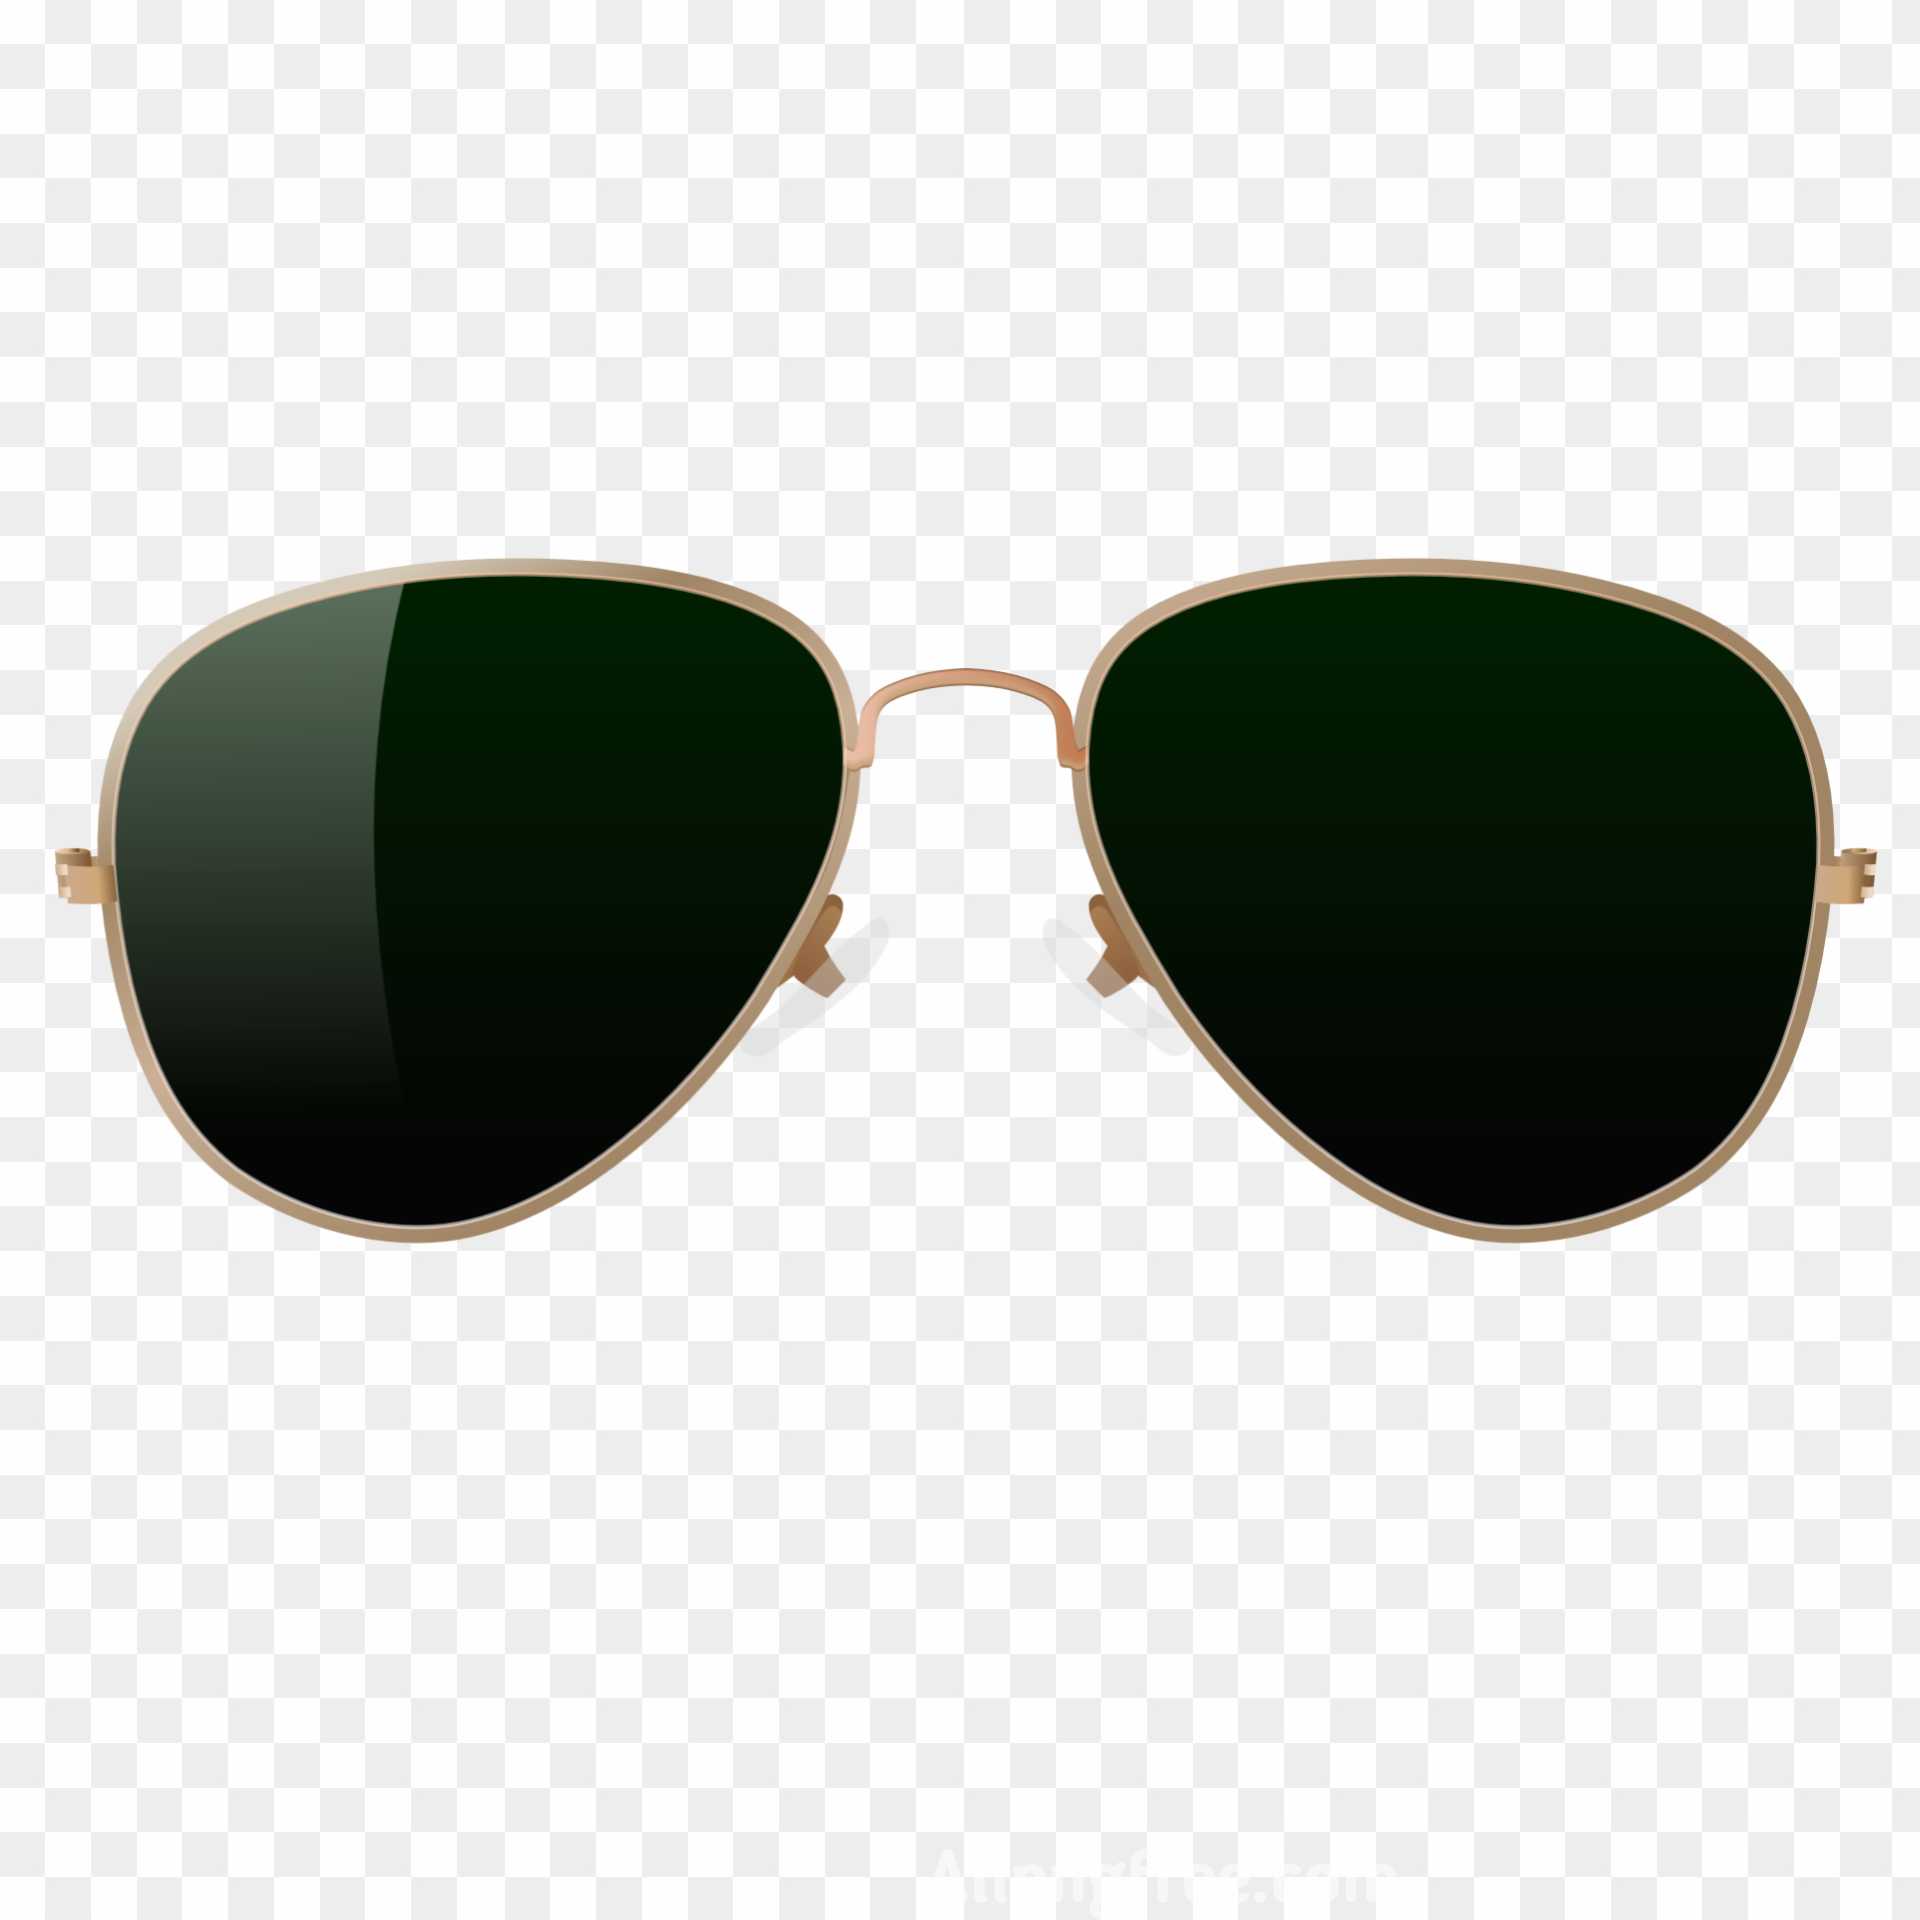 Black Sunglasses PNG images download